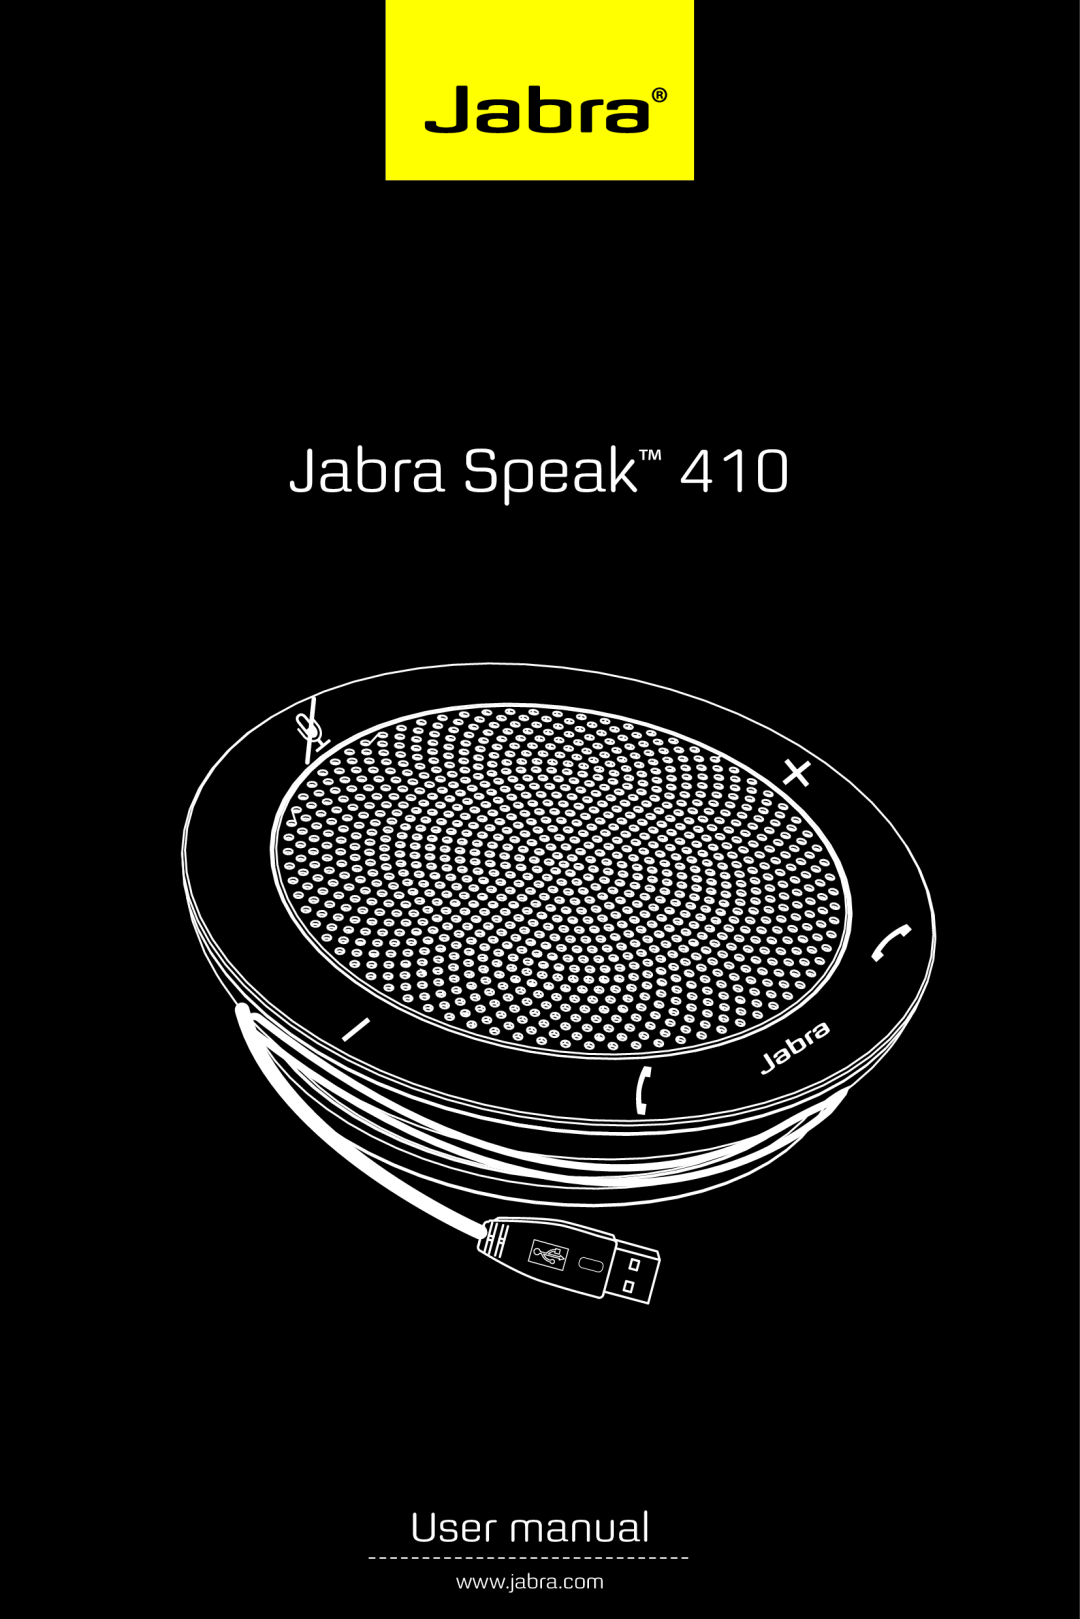 Jabra 410 user manual Jabra Speak 